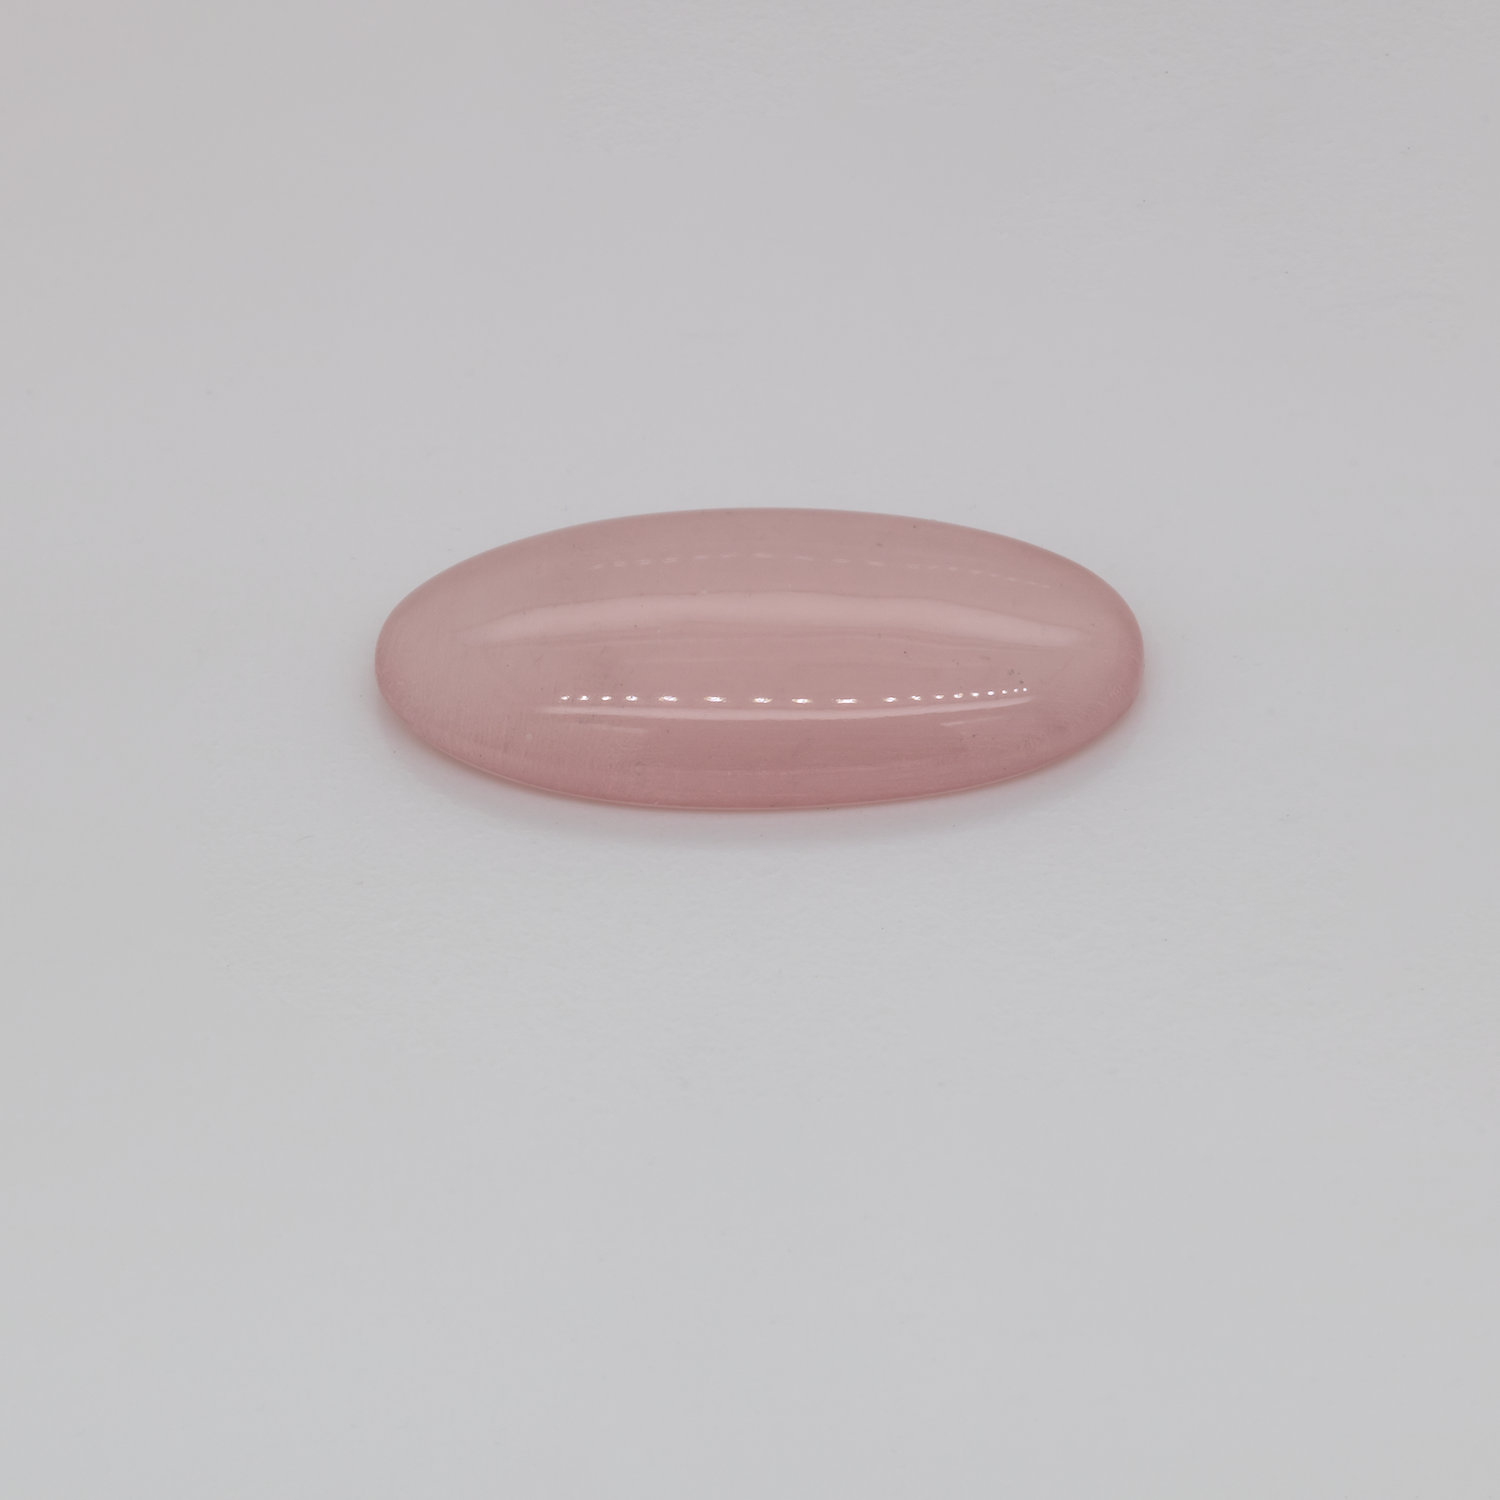 Rose quarz - pink, oval, 19.3x9.6 mm, 4.84 cts, No. RO00005